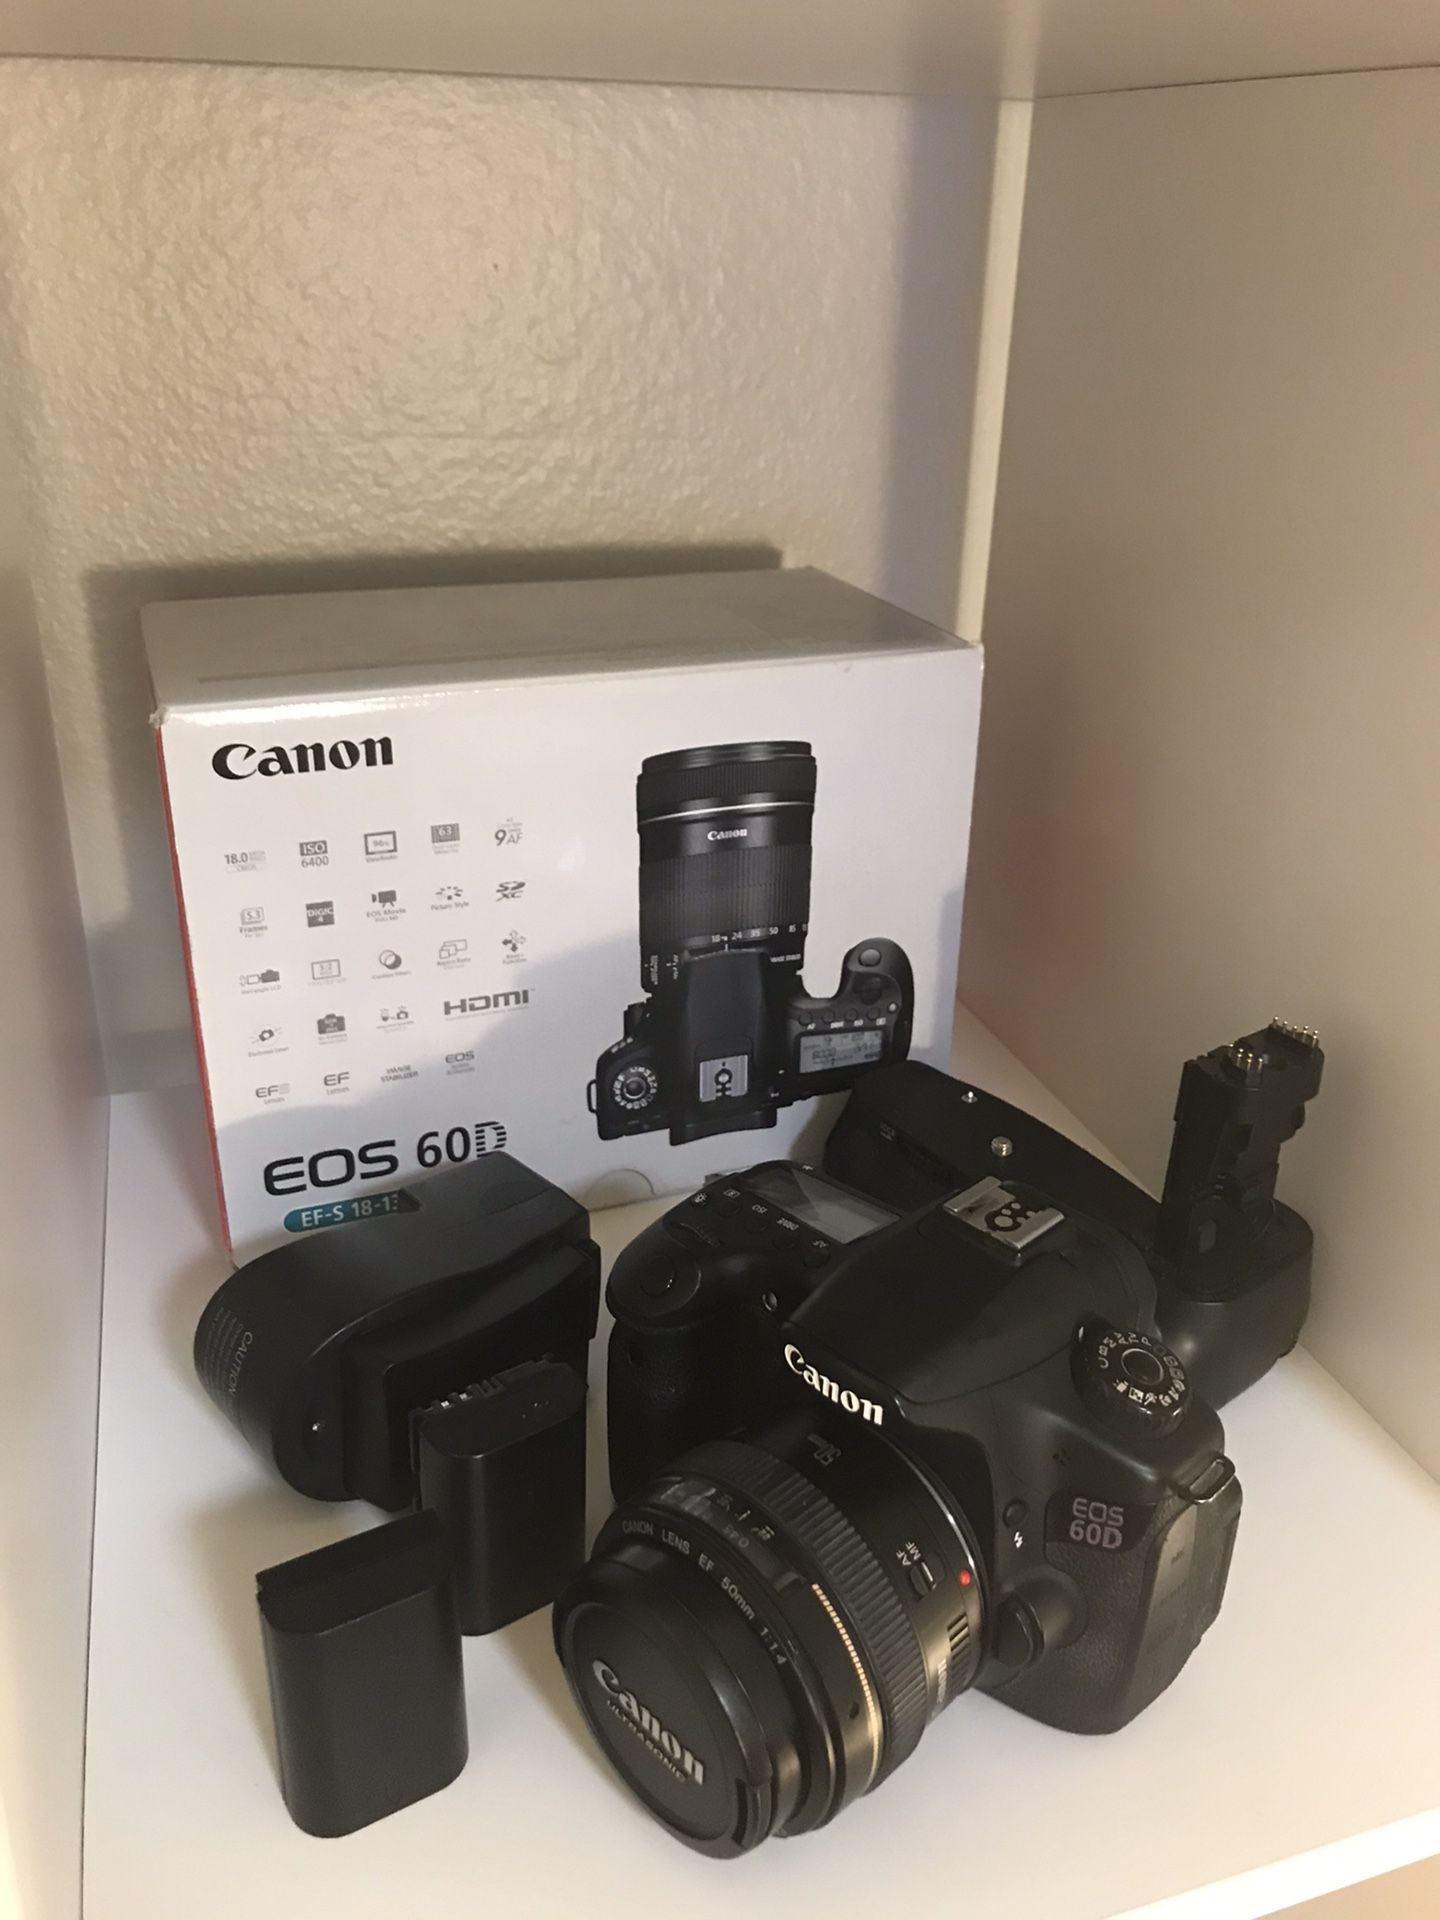 Canon 60D 50mm f/1.4 Battery Grip Kit in Original Box